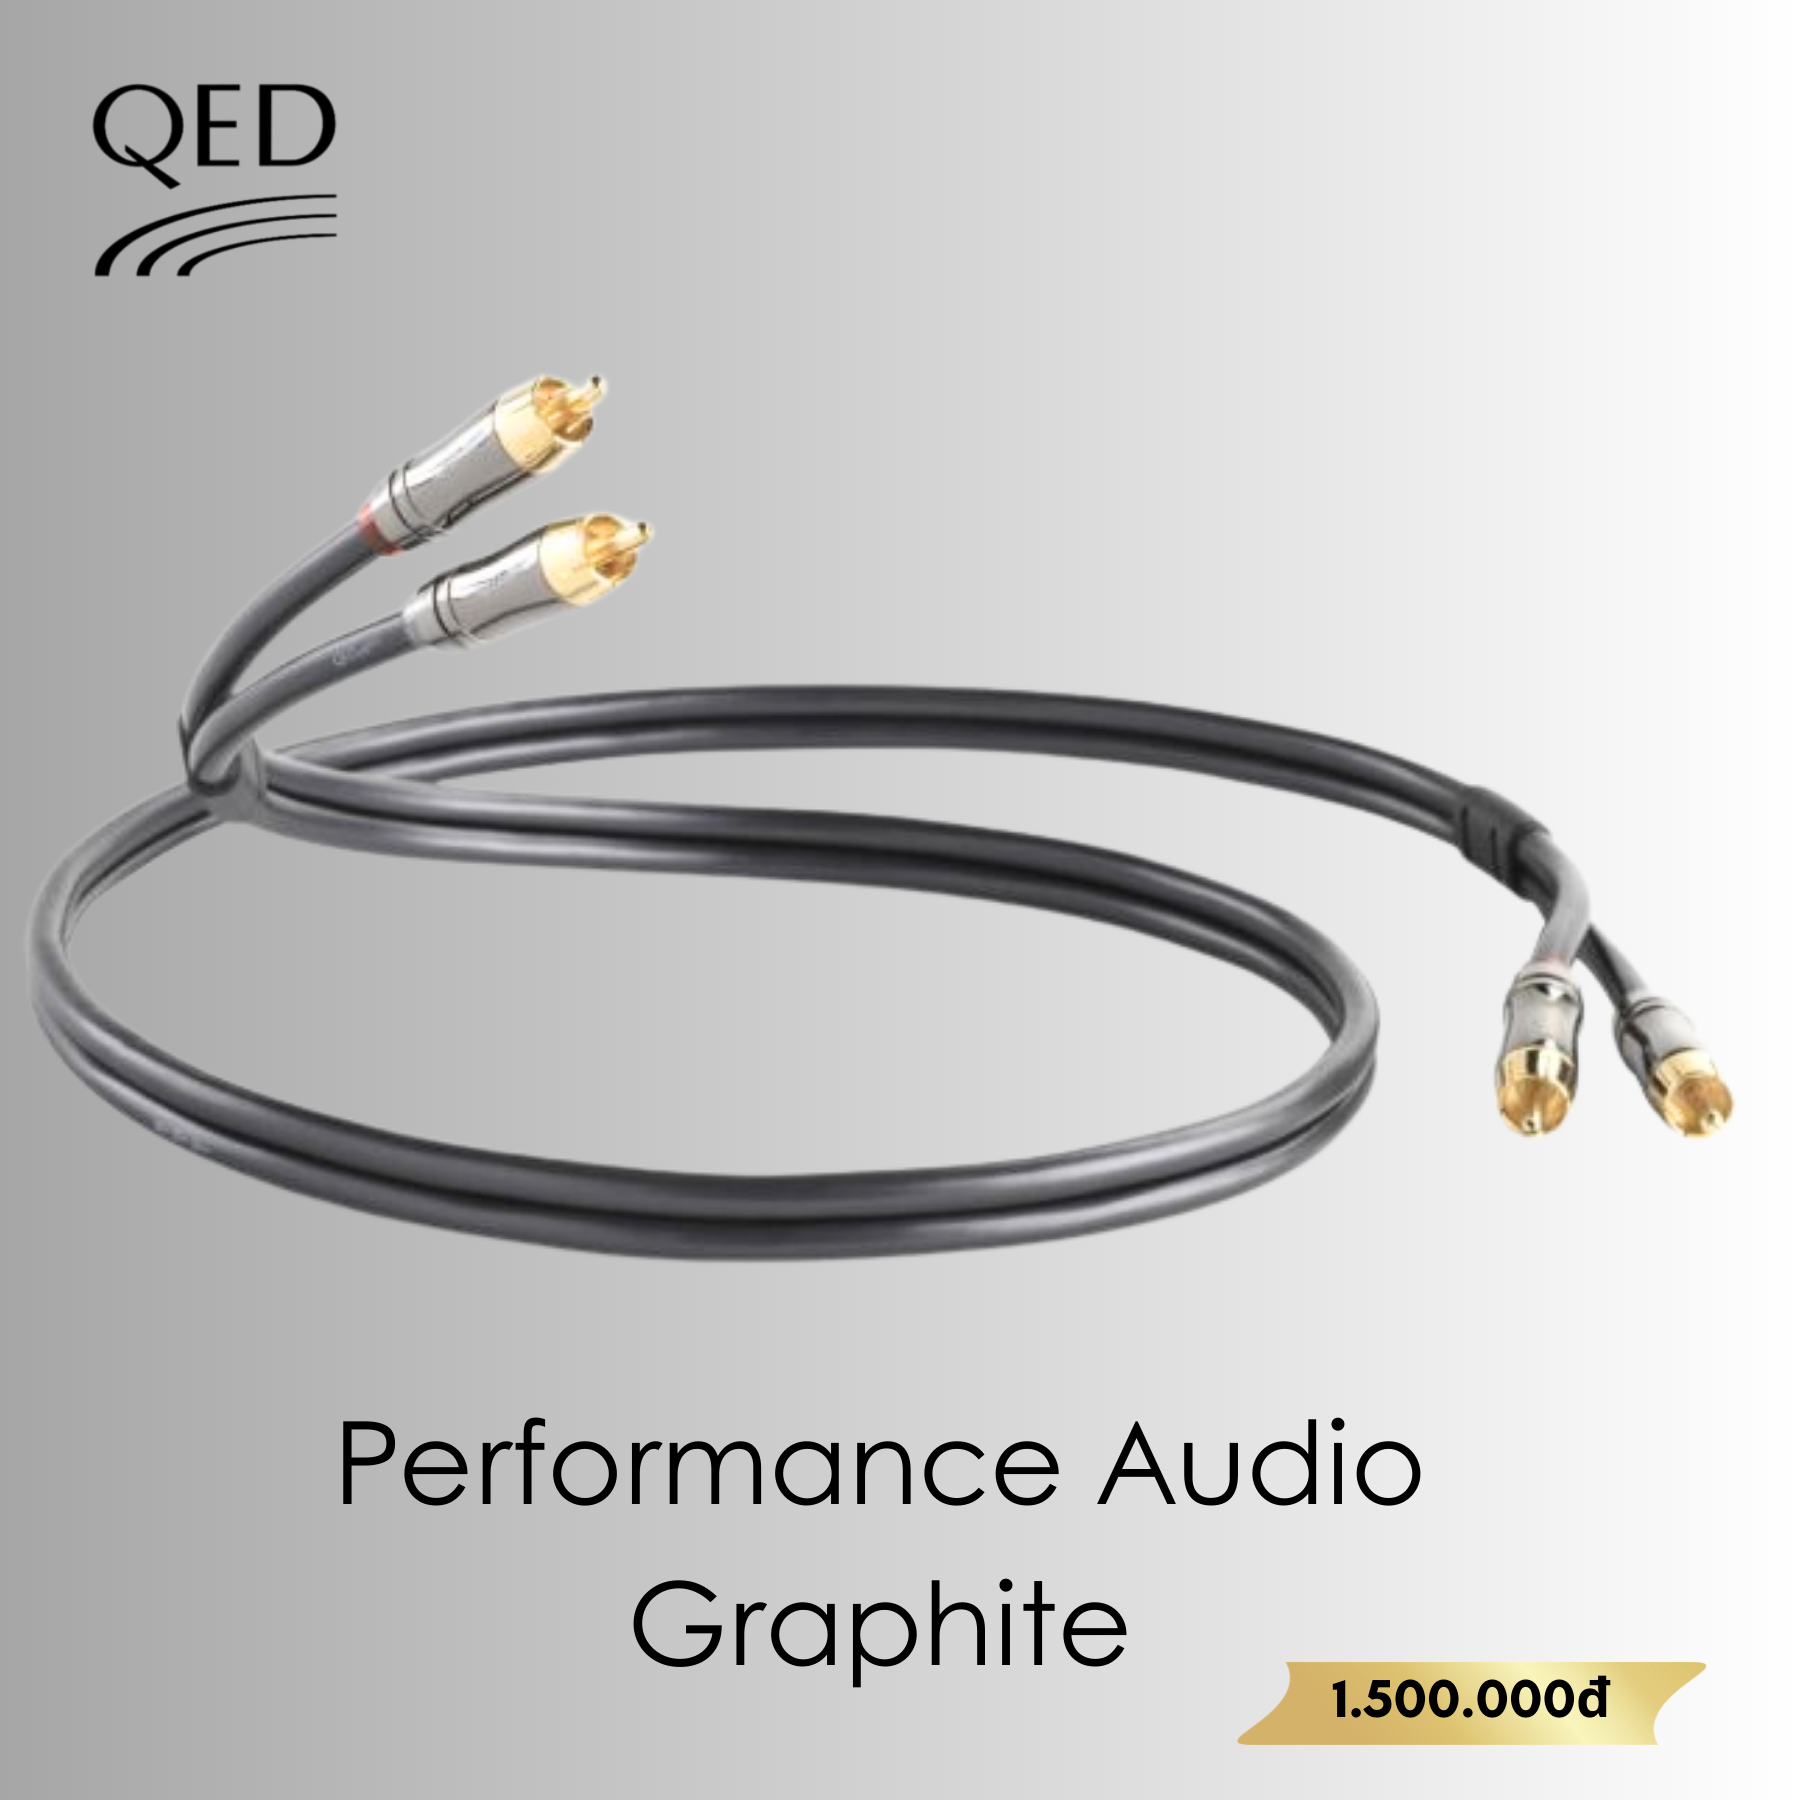 QED Performance Audio Graphite